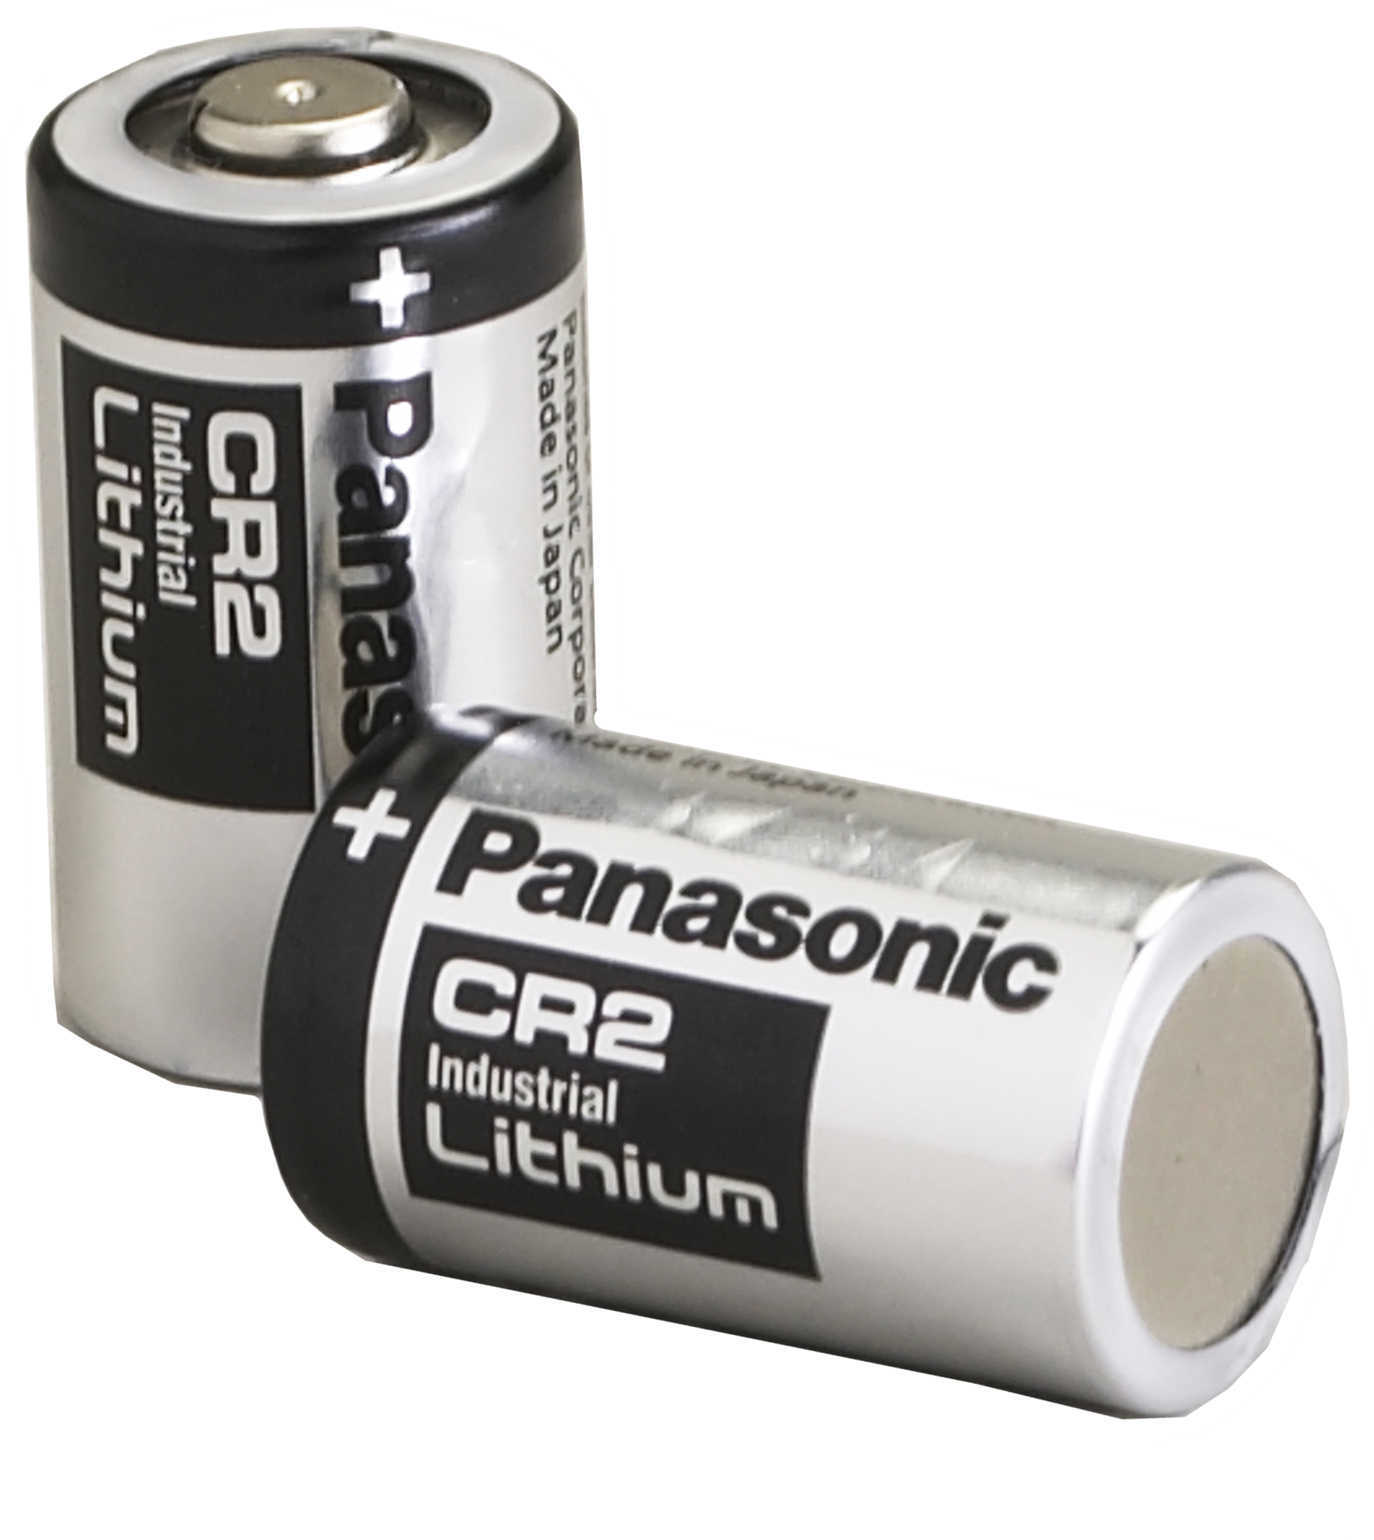 Streamlight Cr2 Lithium Batters - 2 Pack